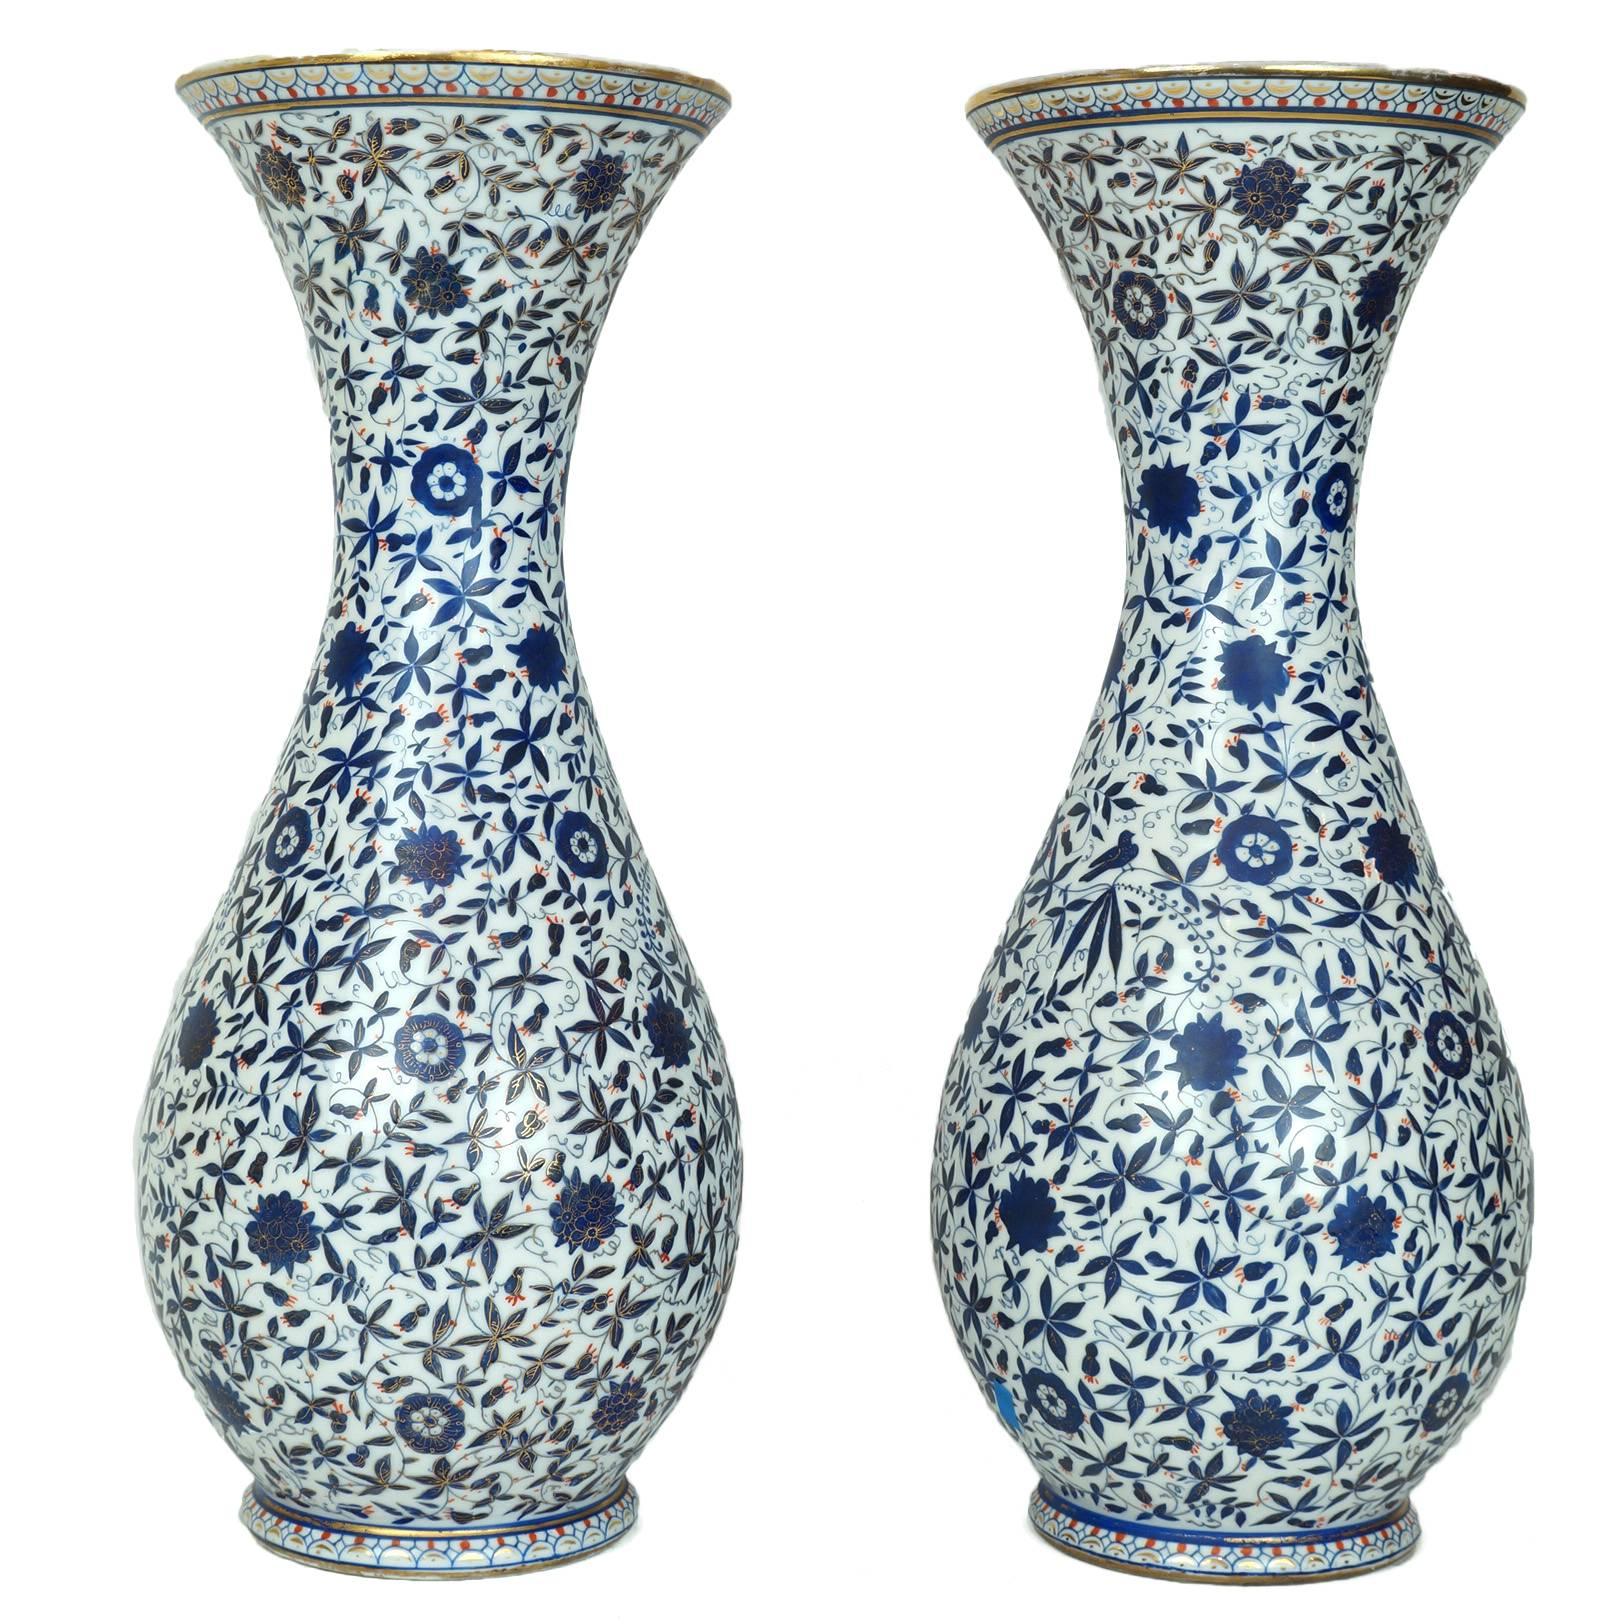 Beautiful Pair of Turkish Iznik Design Blue and White Porcelain Flower Vases